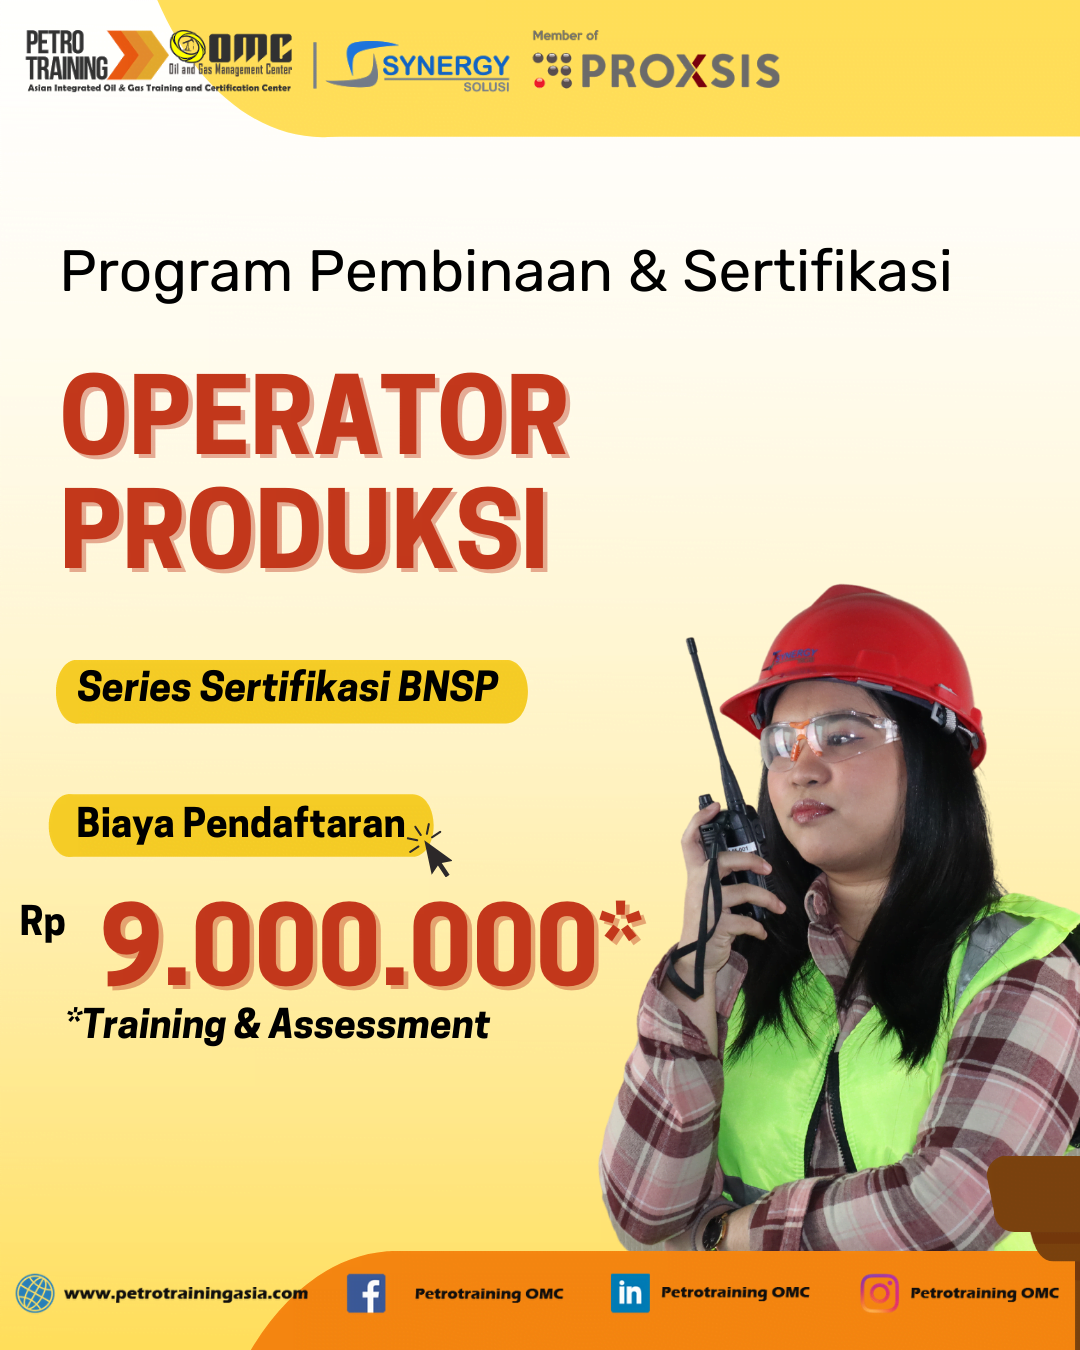 Operator produksi